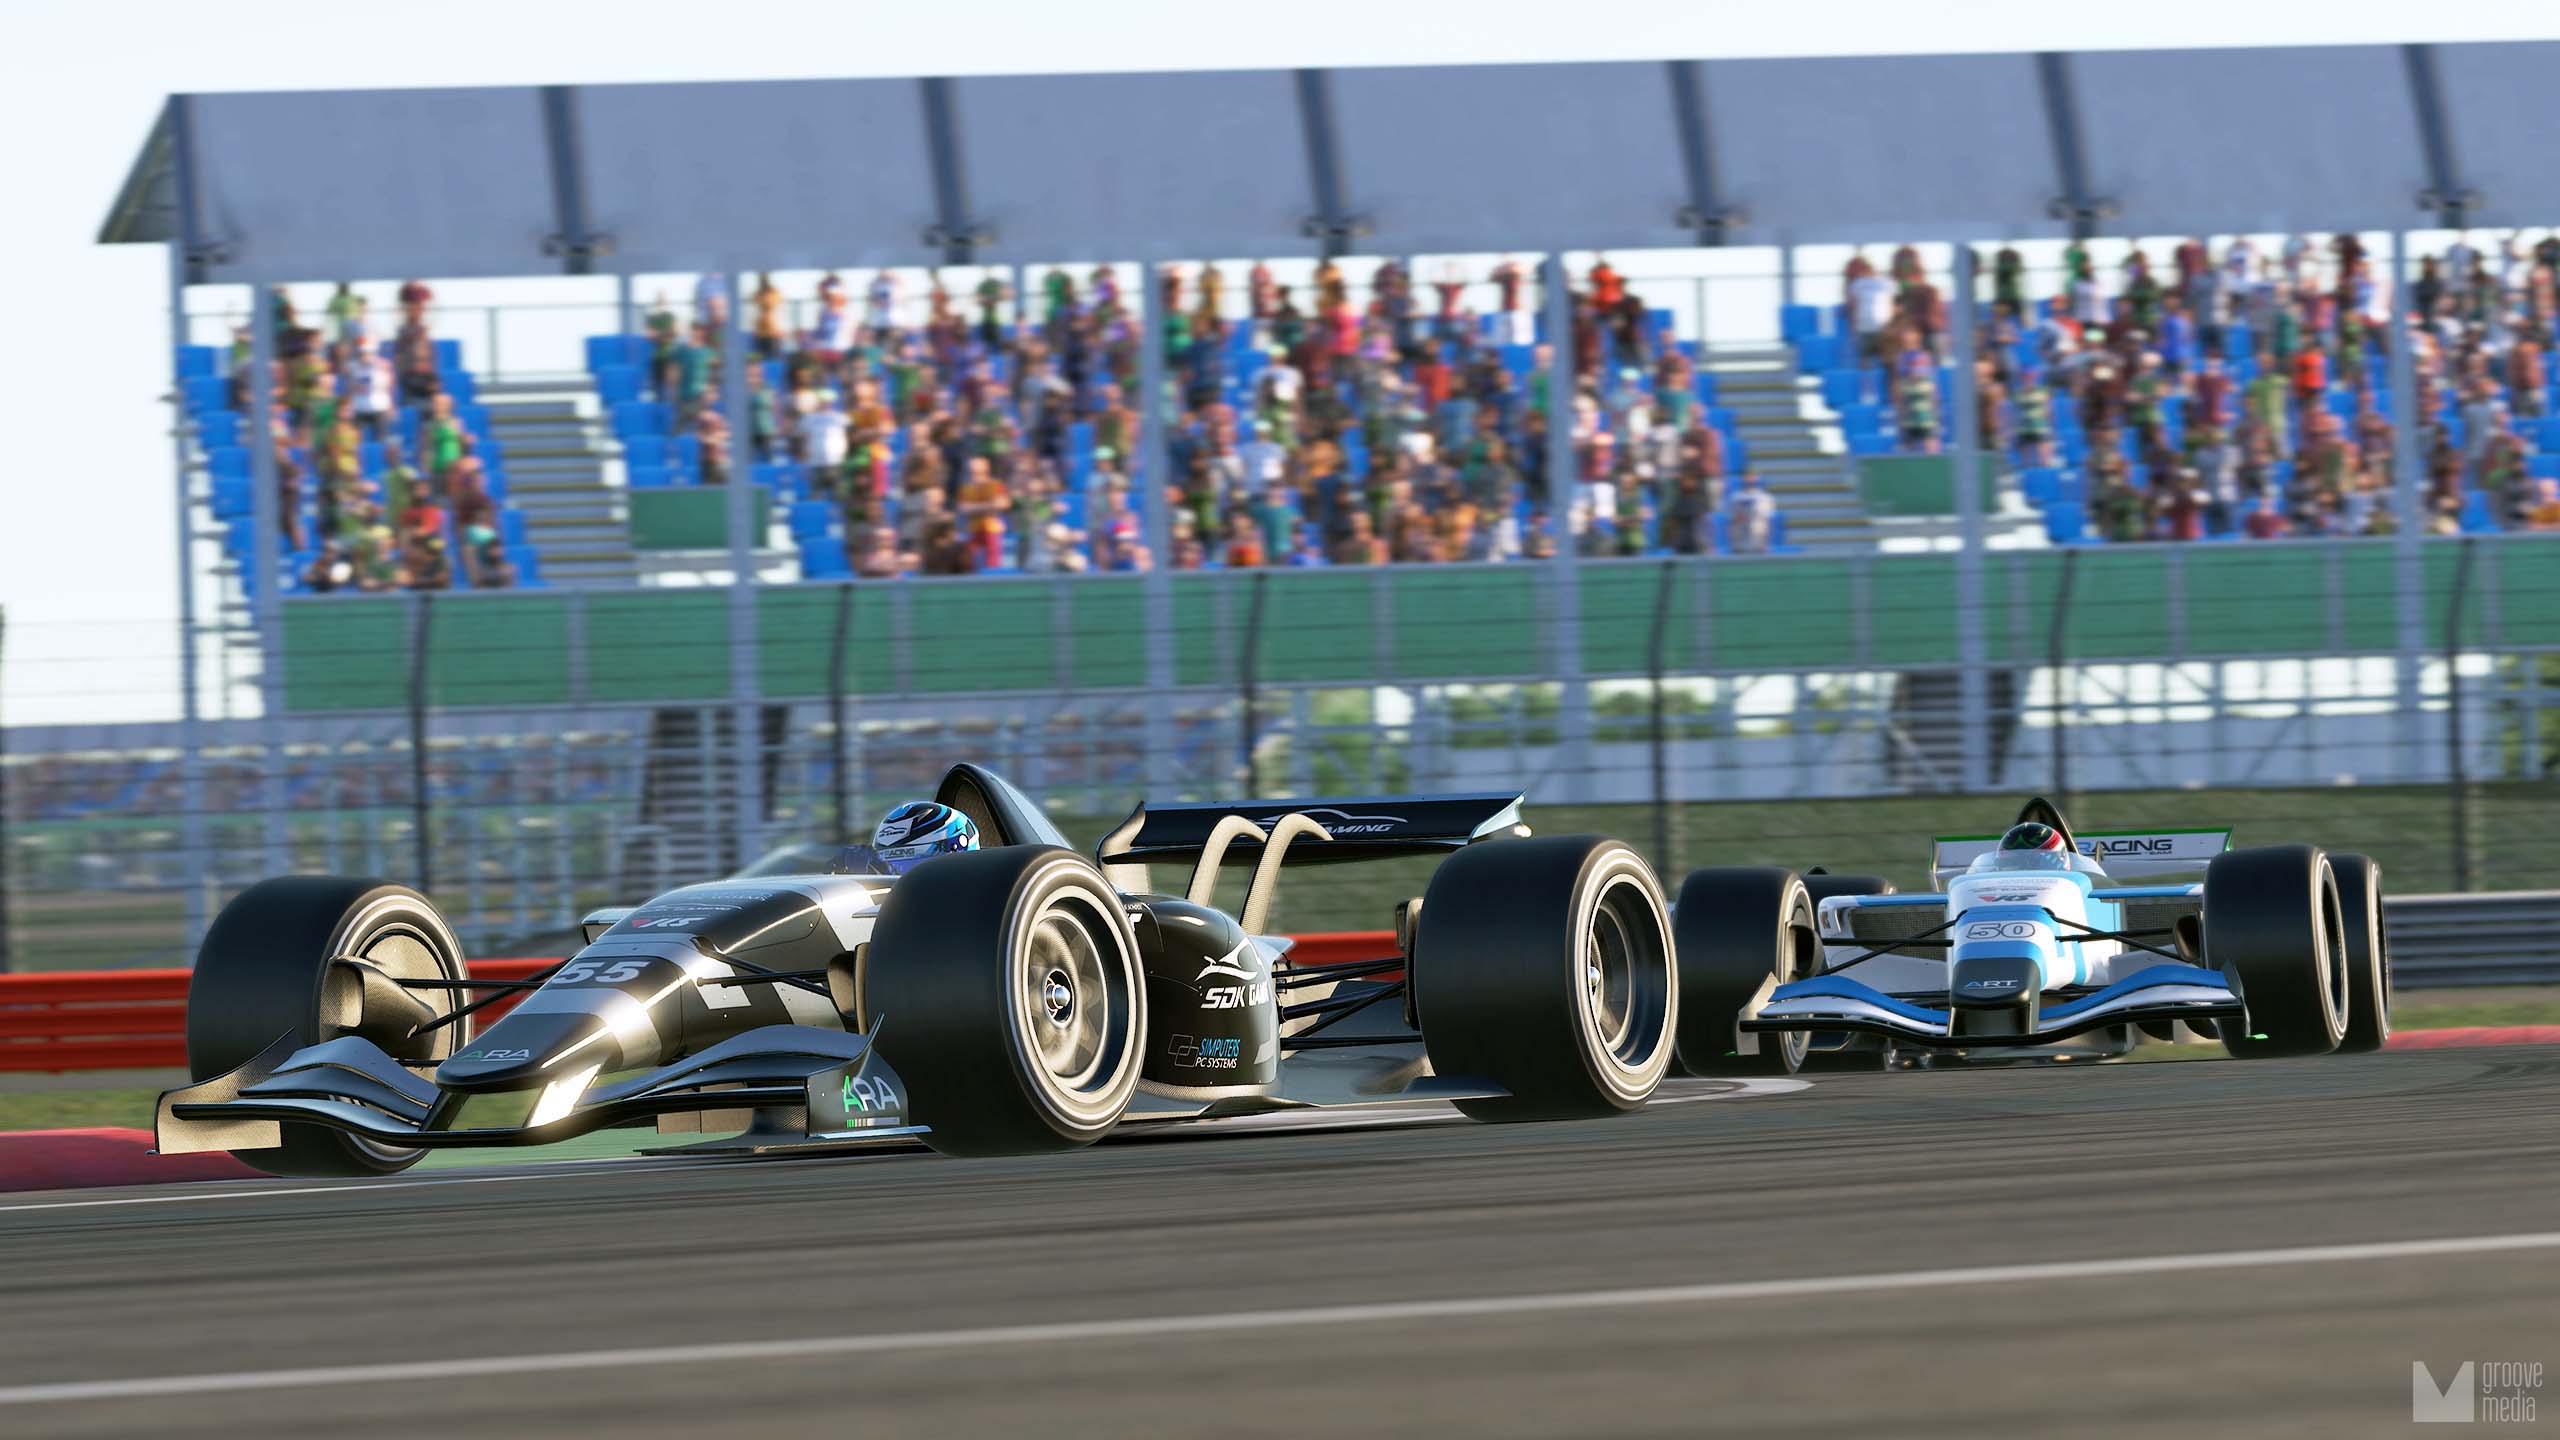 iR01 Grand Prix Silverstone